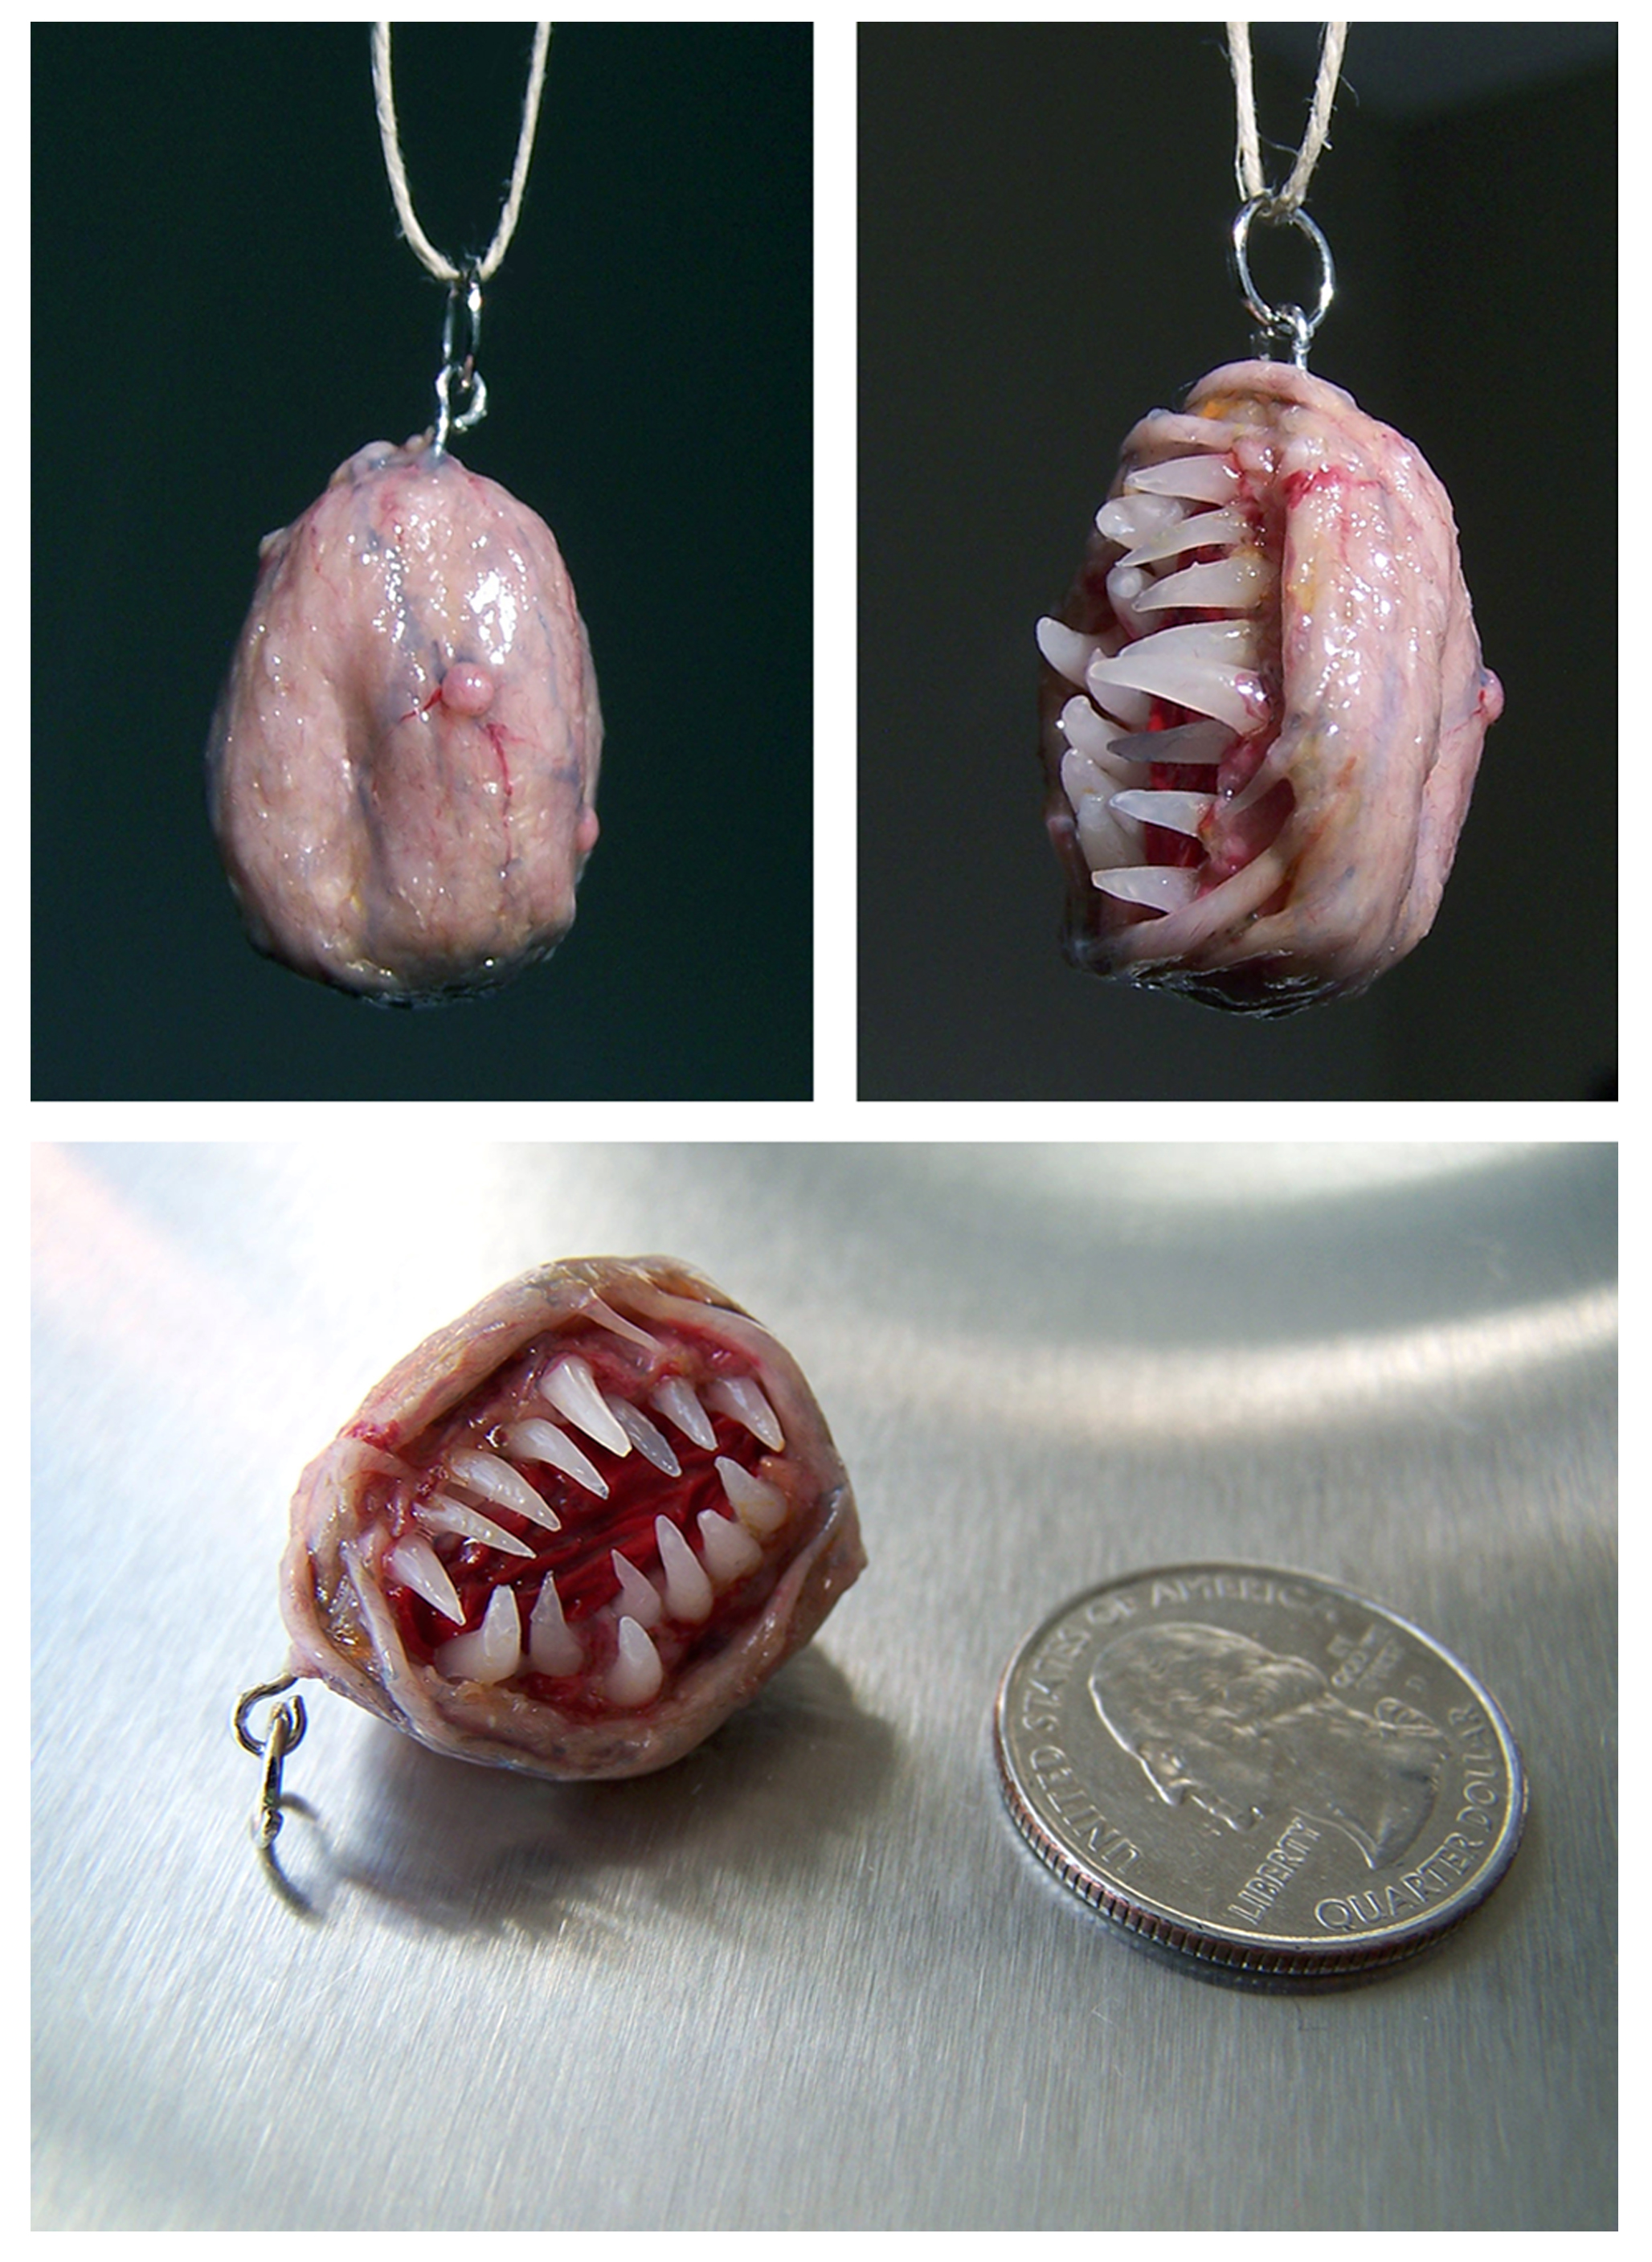 Little weird fleshball pendant from outerspace